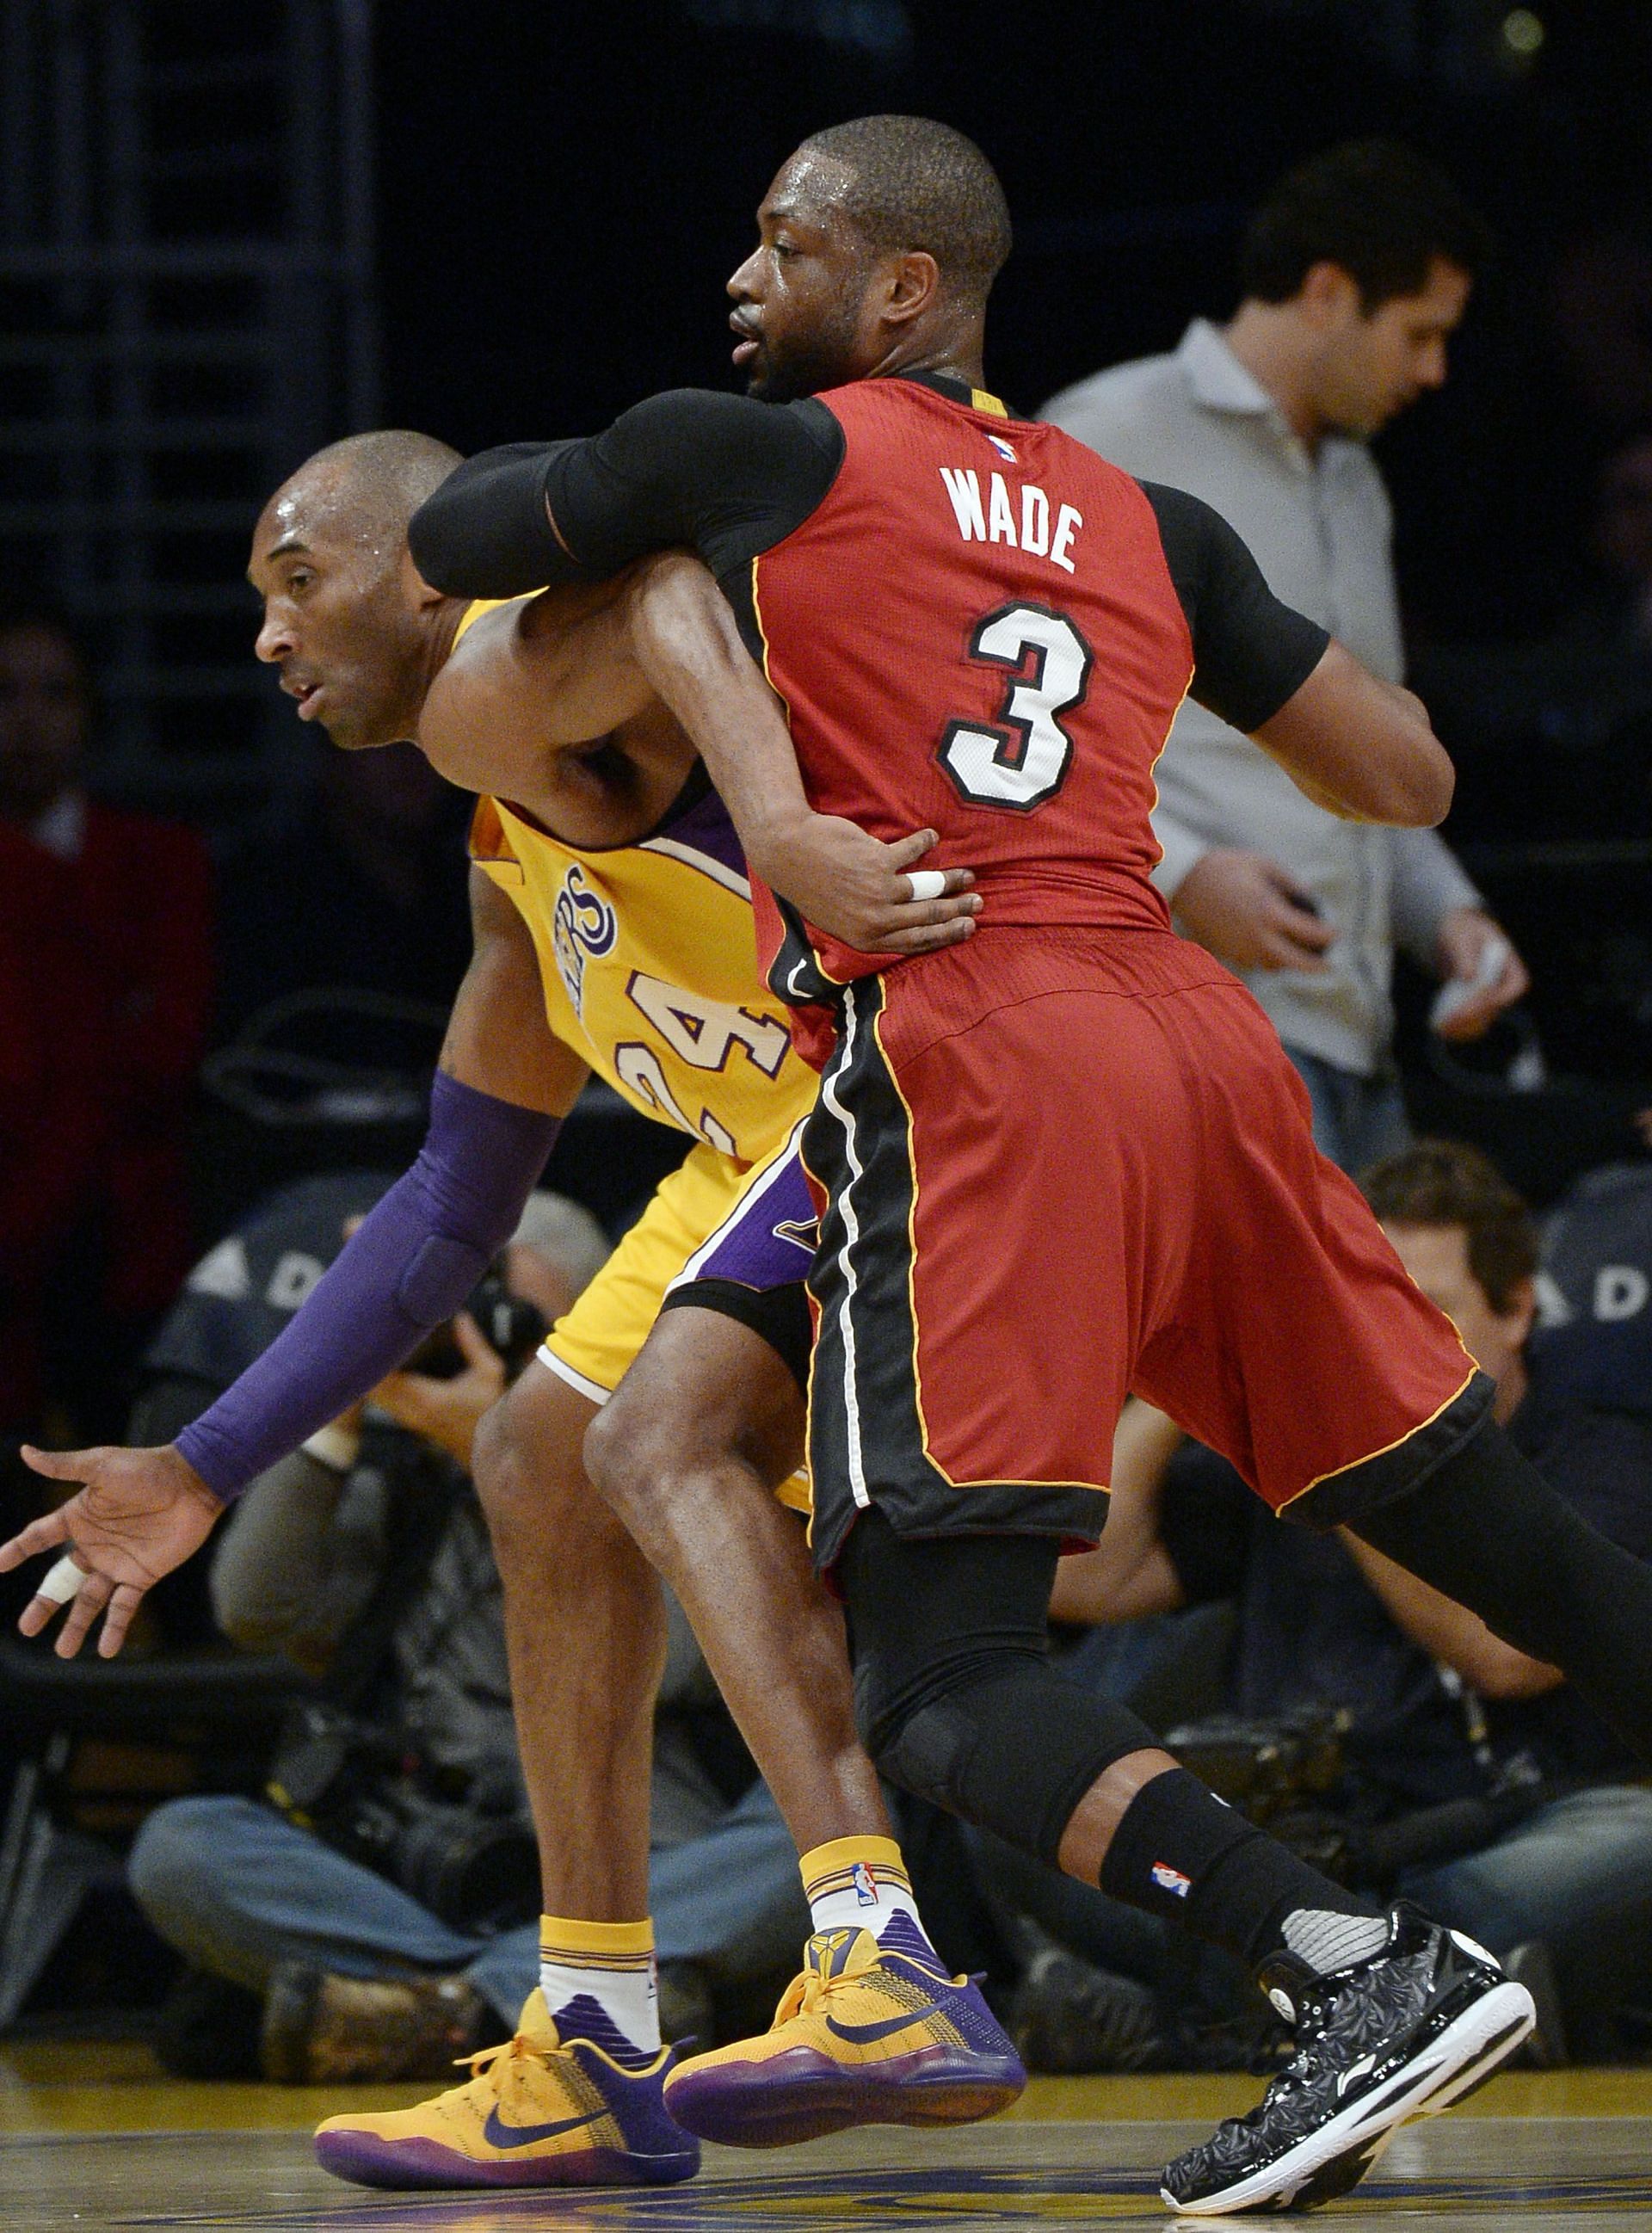 LA Lakers star Kobe Bryant posts up as Miami Heat star Dwyane Wade defends.